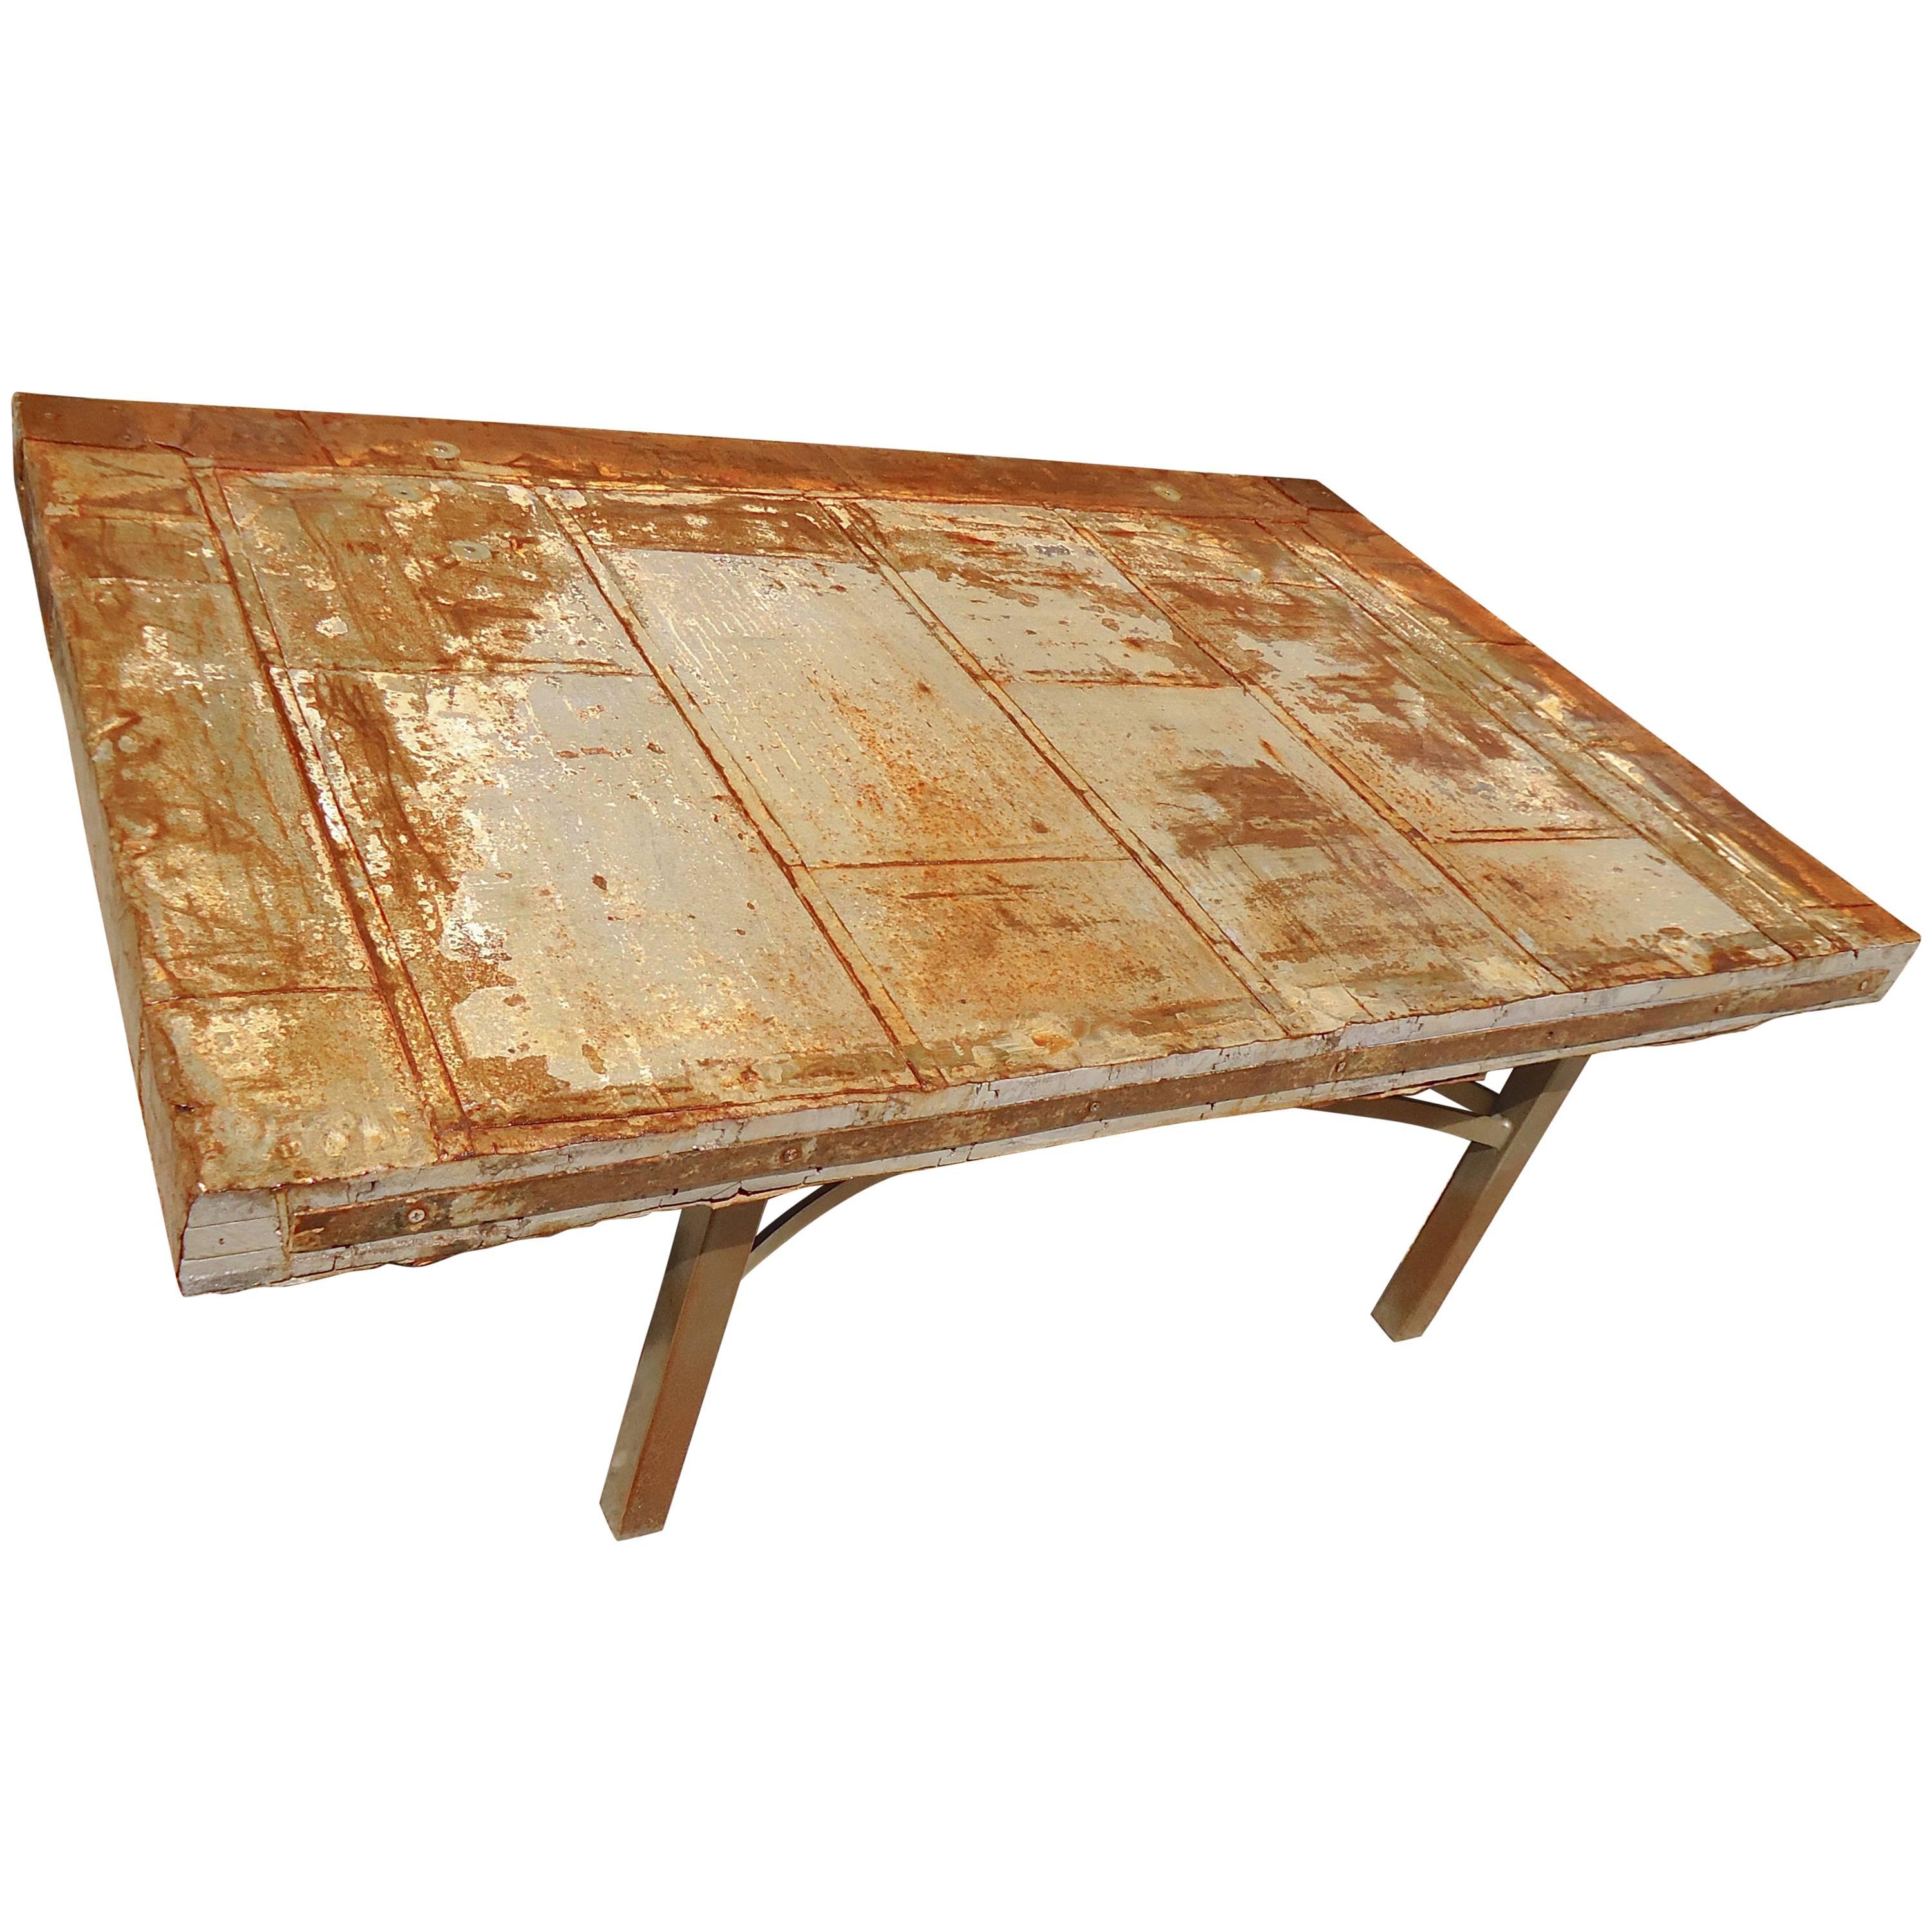 Fantatsic Handmade Table from Reclaimed Metal Door